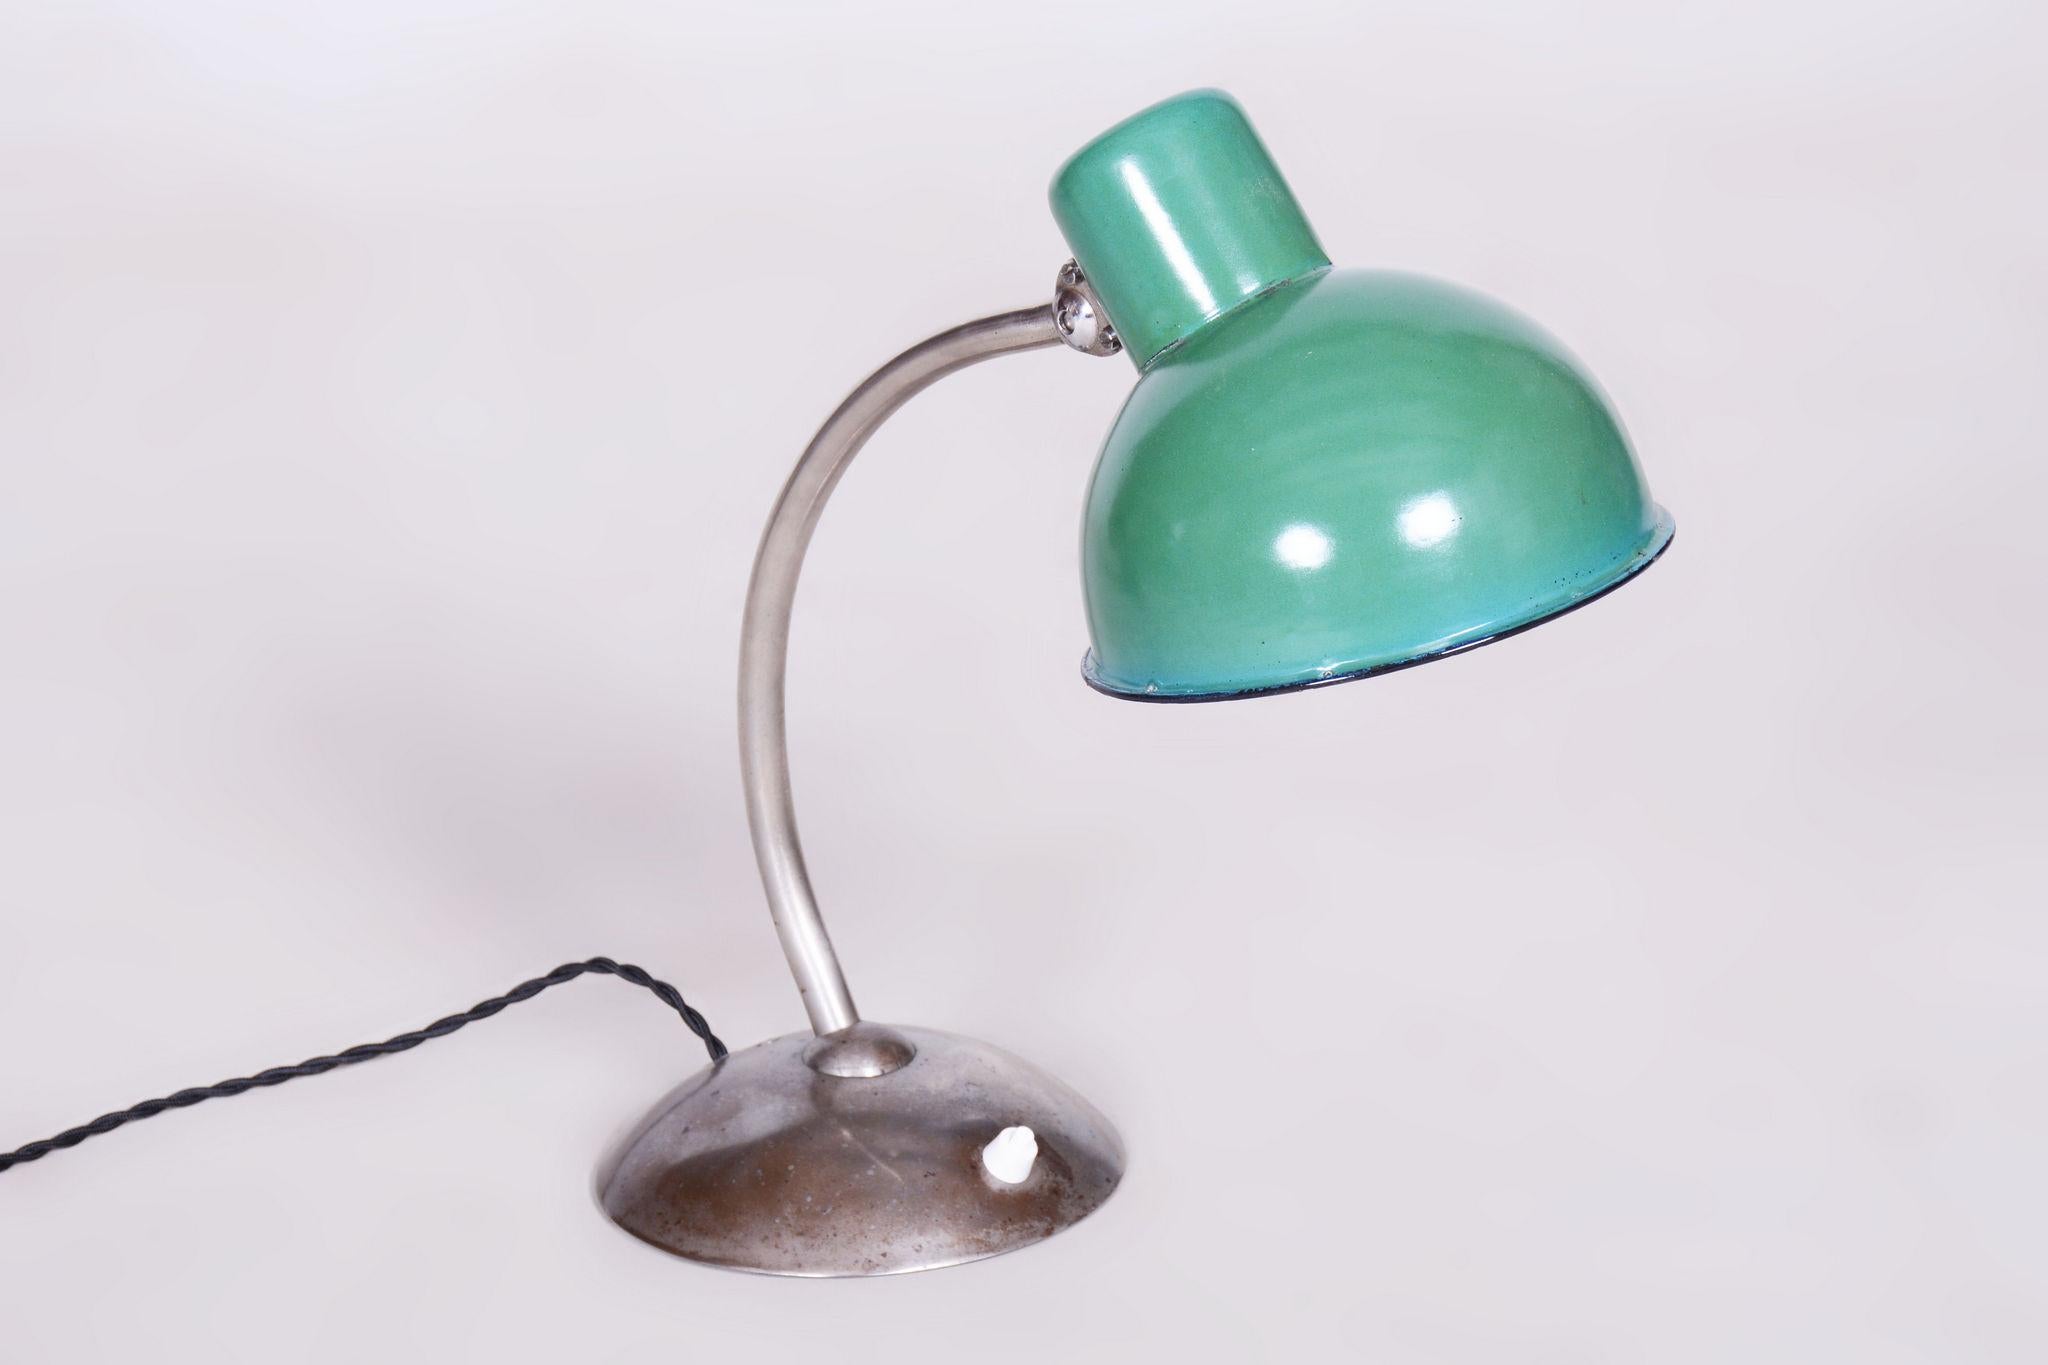 Restored Bauhaus Table Lamp, New Electrification, Chrome, Czechia, 1930s For Sale 1